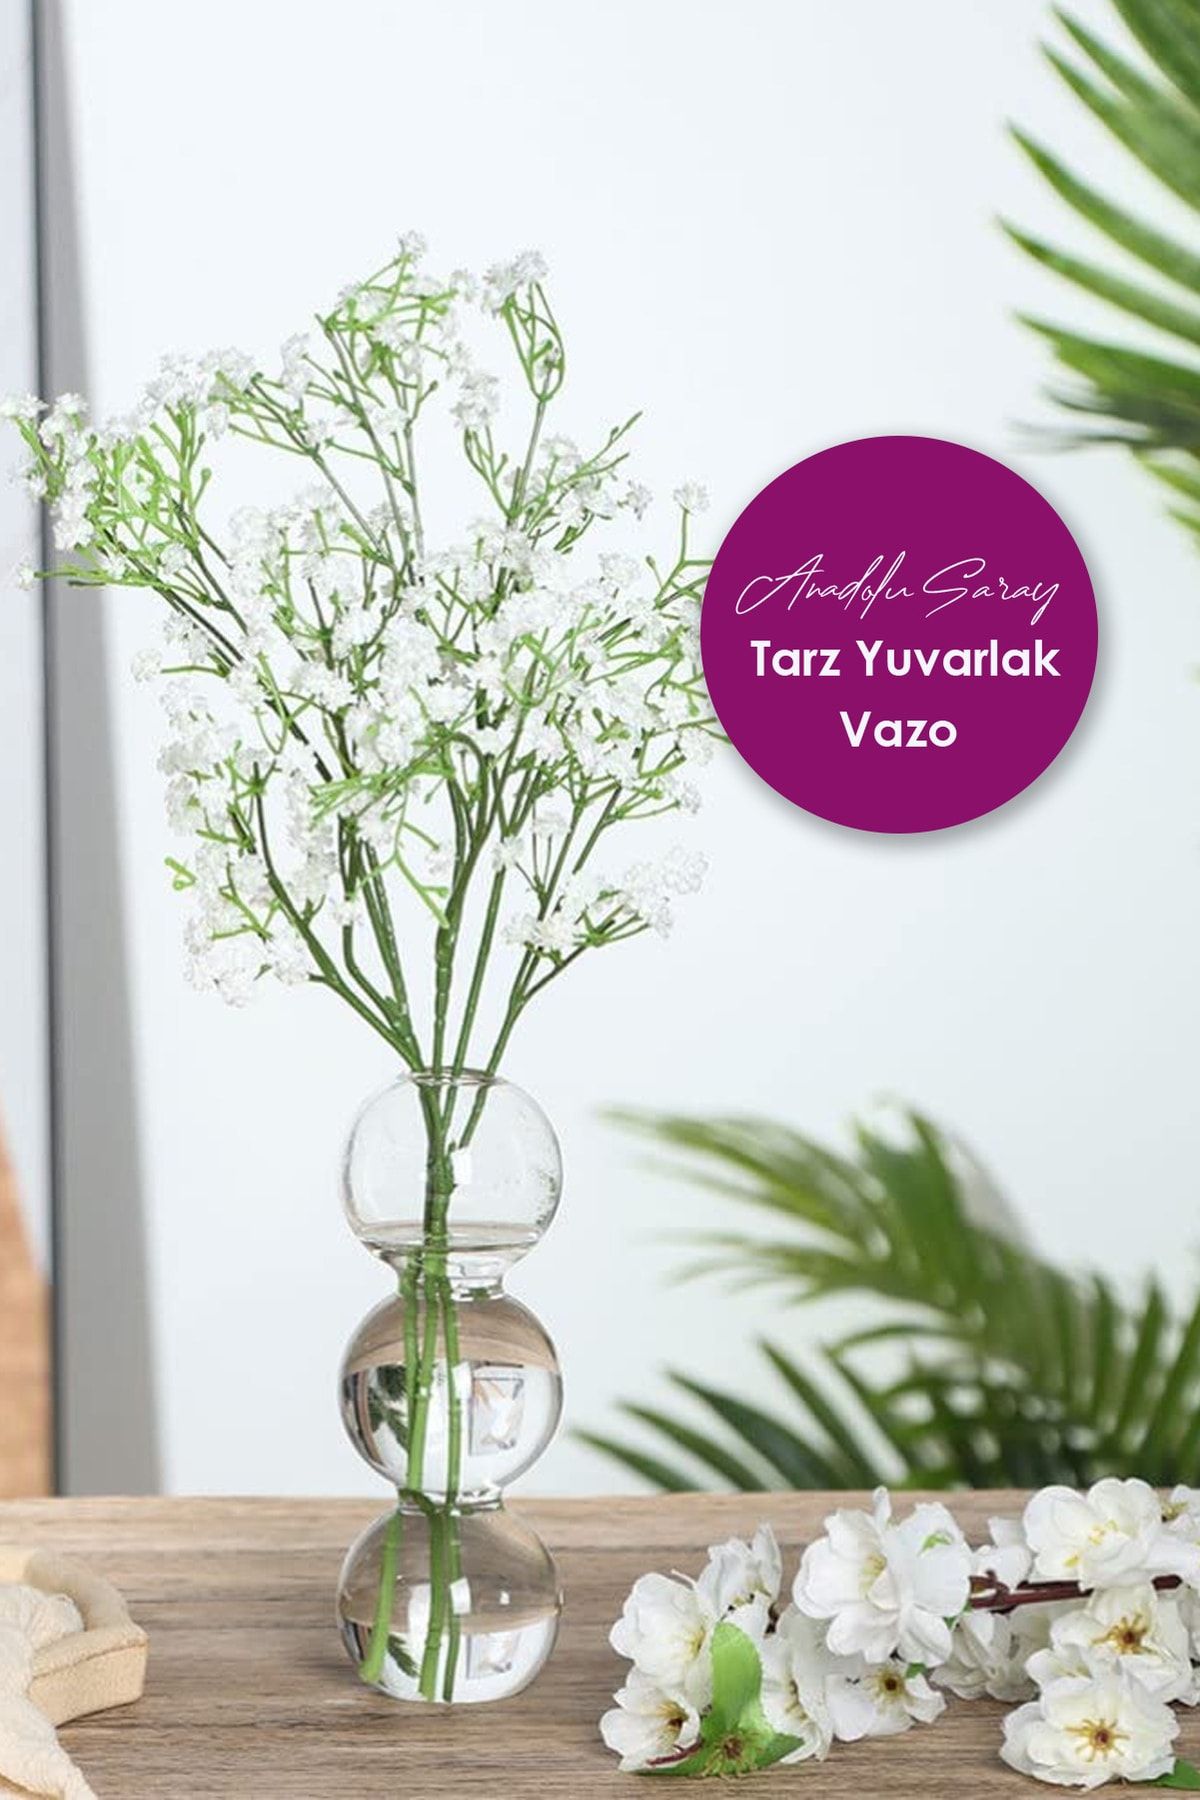 Anadolu Saray Çarşısı Boğumlu Yuvarlak Stil Tarz Vazo | Iskandinav Tarz Modern Vazo Saksı | Dekoratif Saksı - 1 Adet